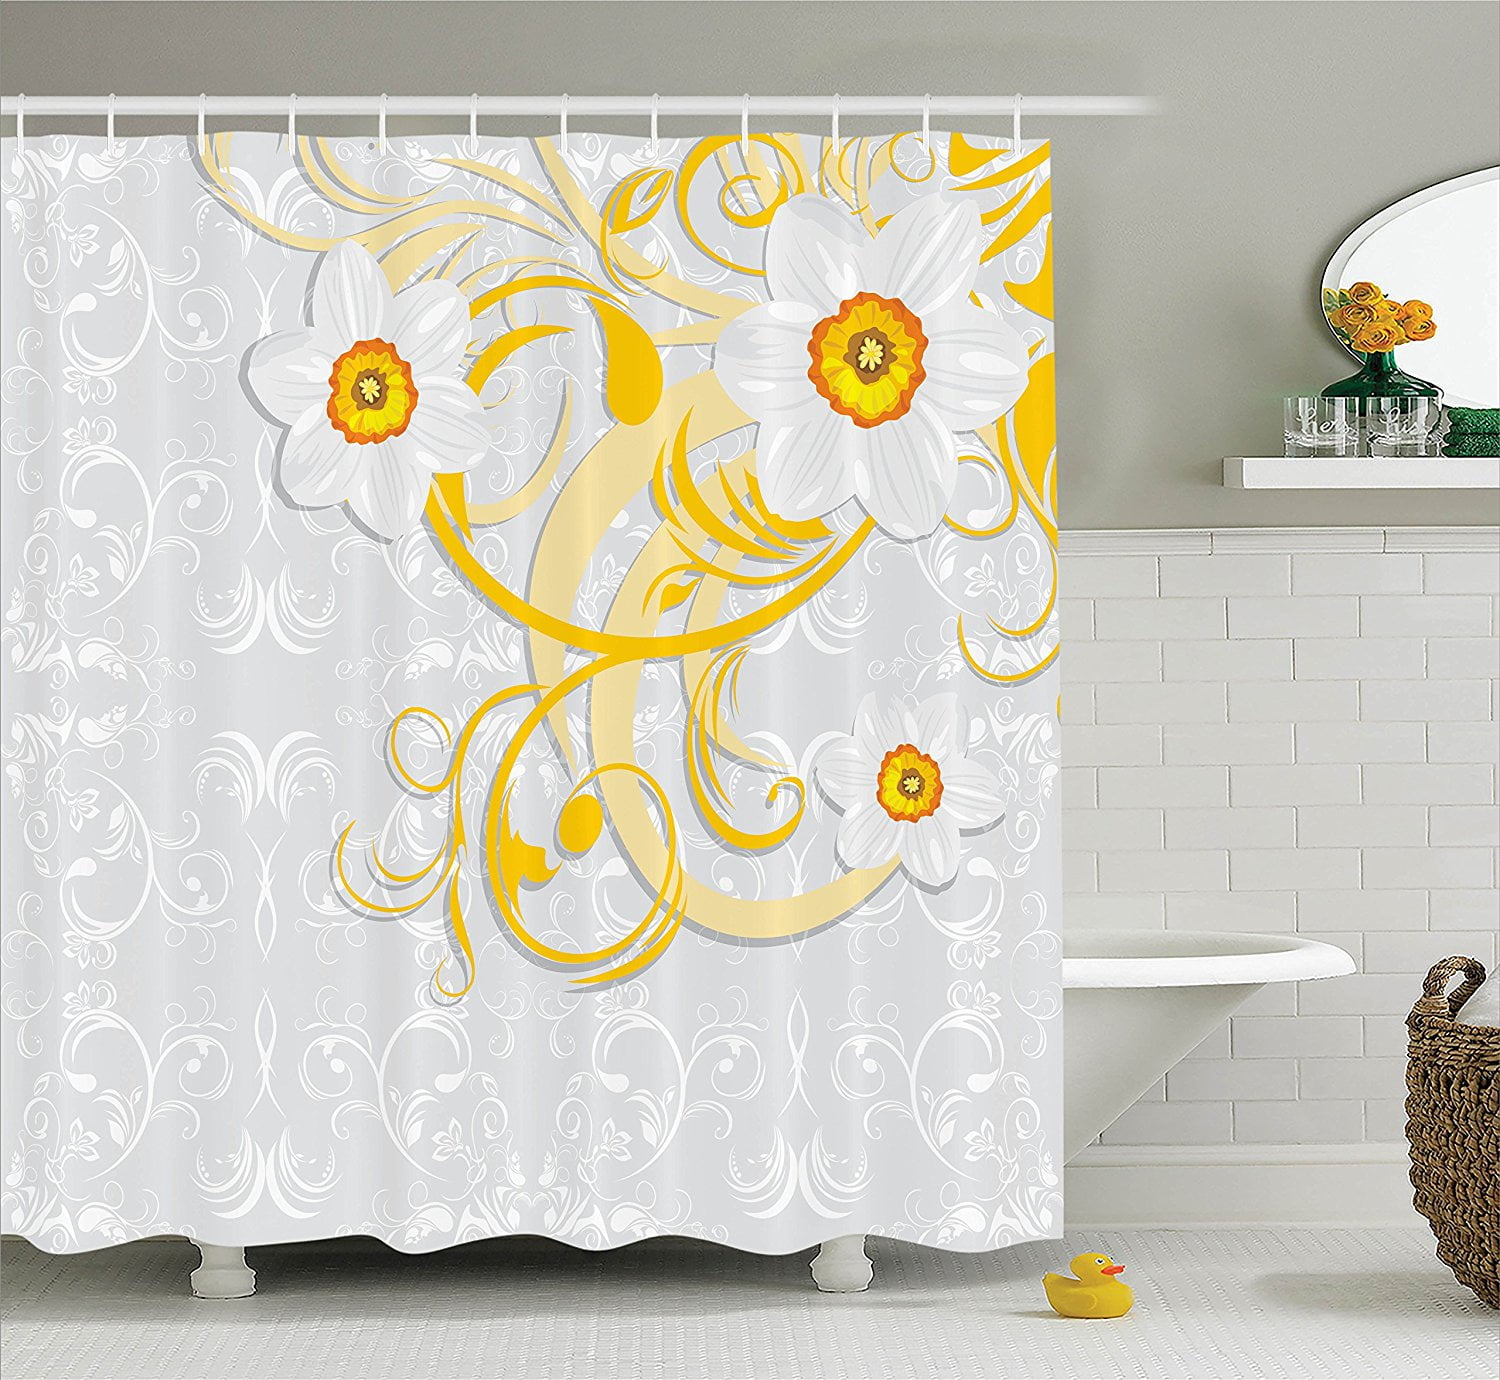 Customized Running Horse Art Bathroom Shower Curtain Set Fabric & Hooks 71Inches 